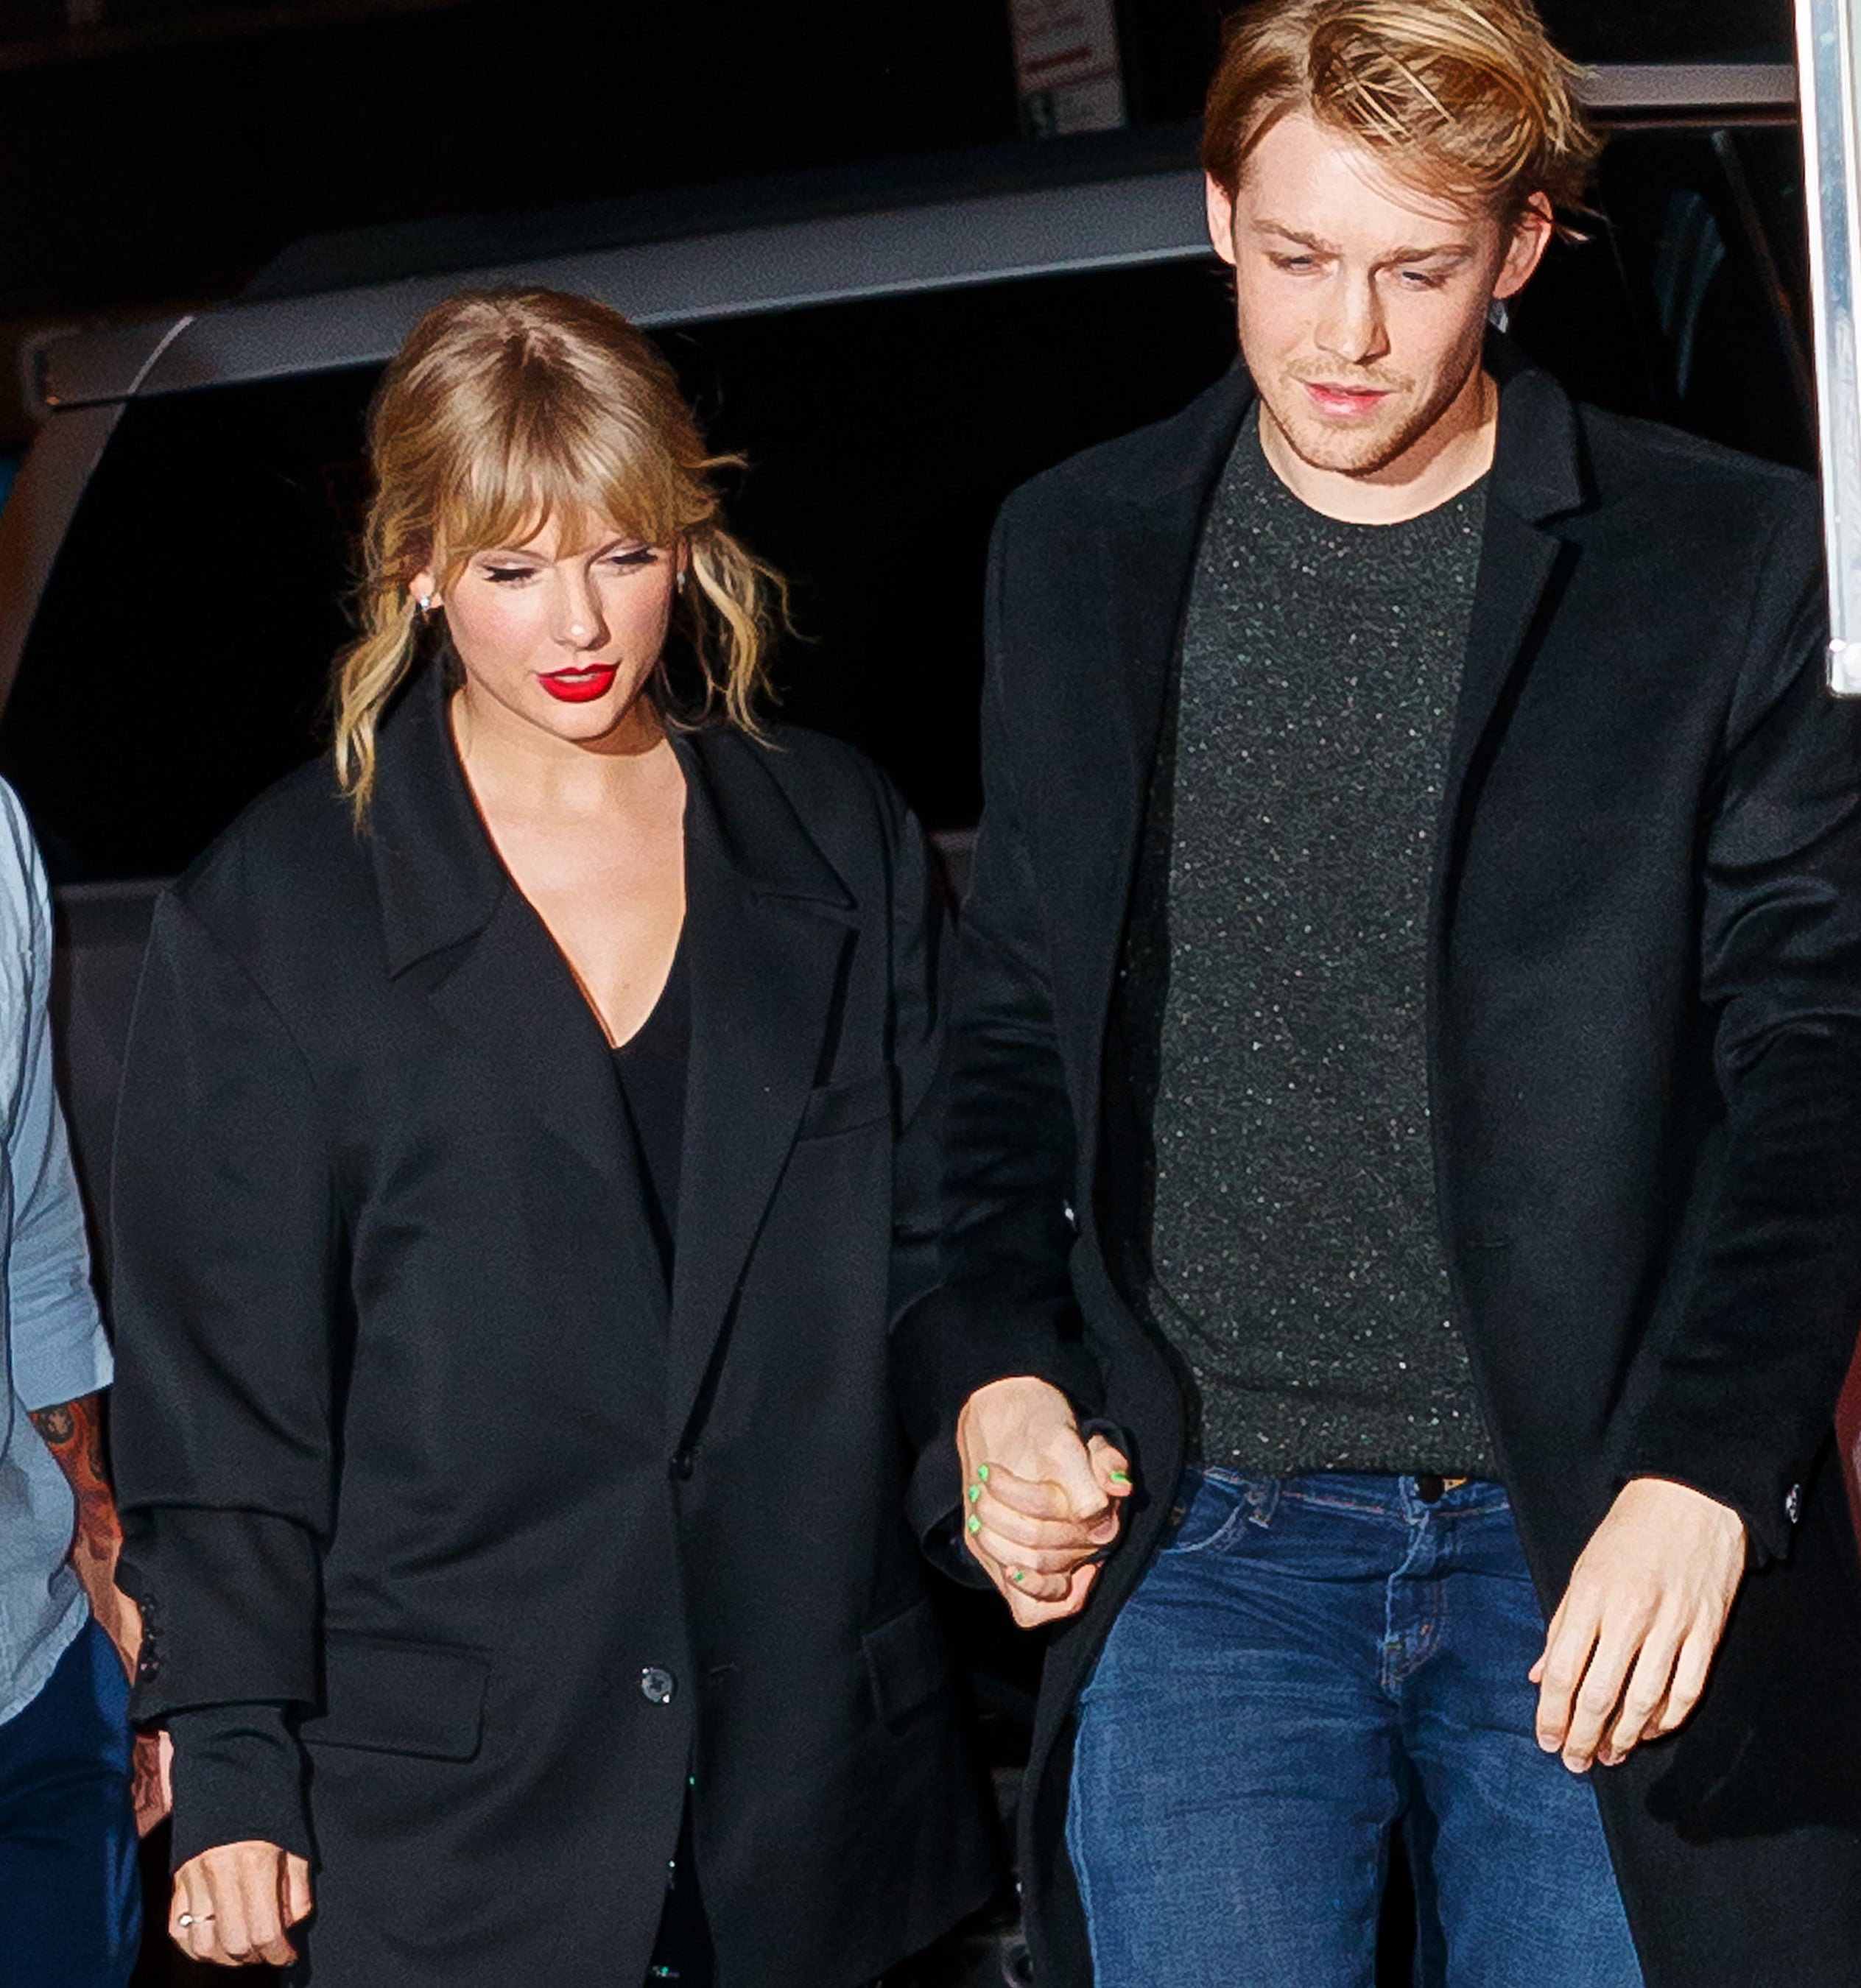 Taylor Swift with Joe Alwyn, both in stylish dark coats, walking and holding hands